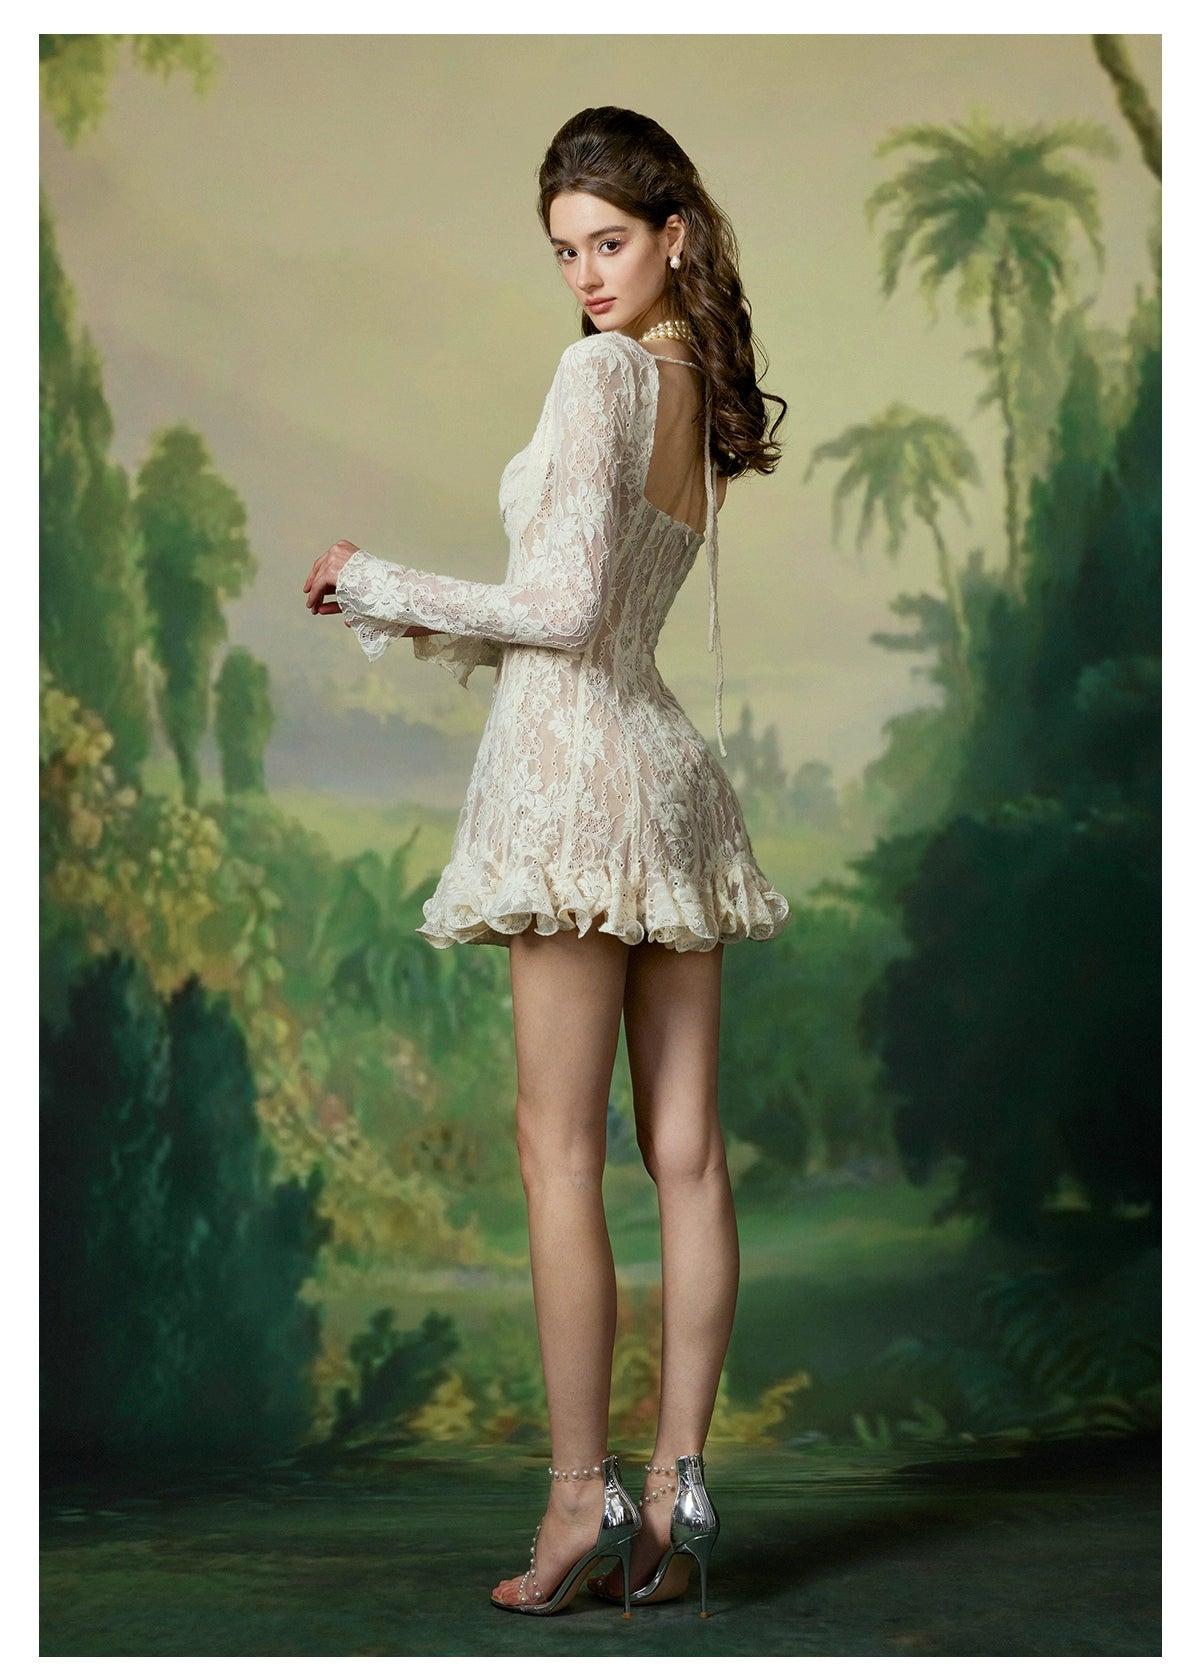 Lace Cinched Waist Long Sleeve Dress - CHINASQUAD